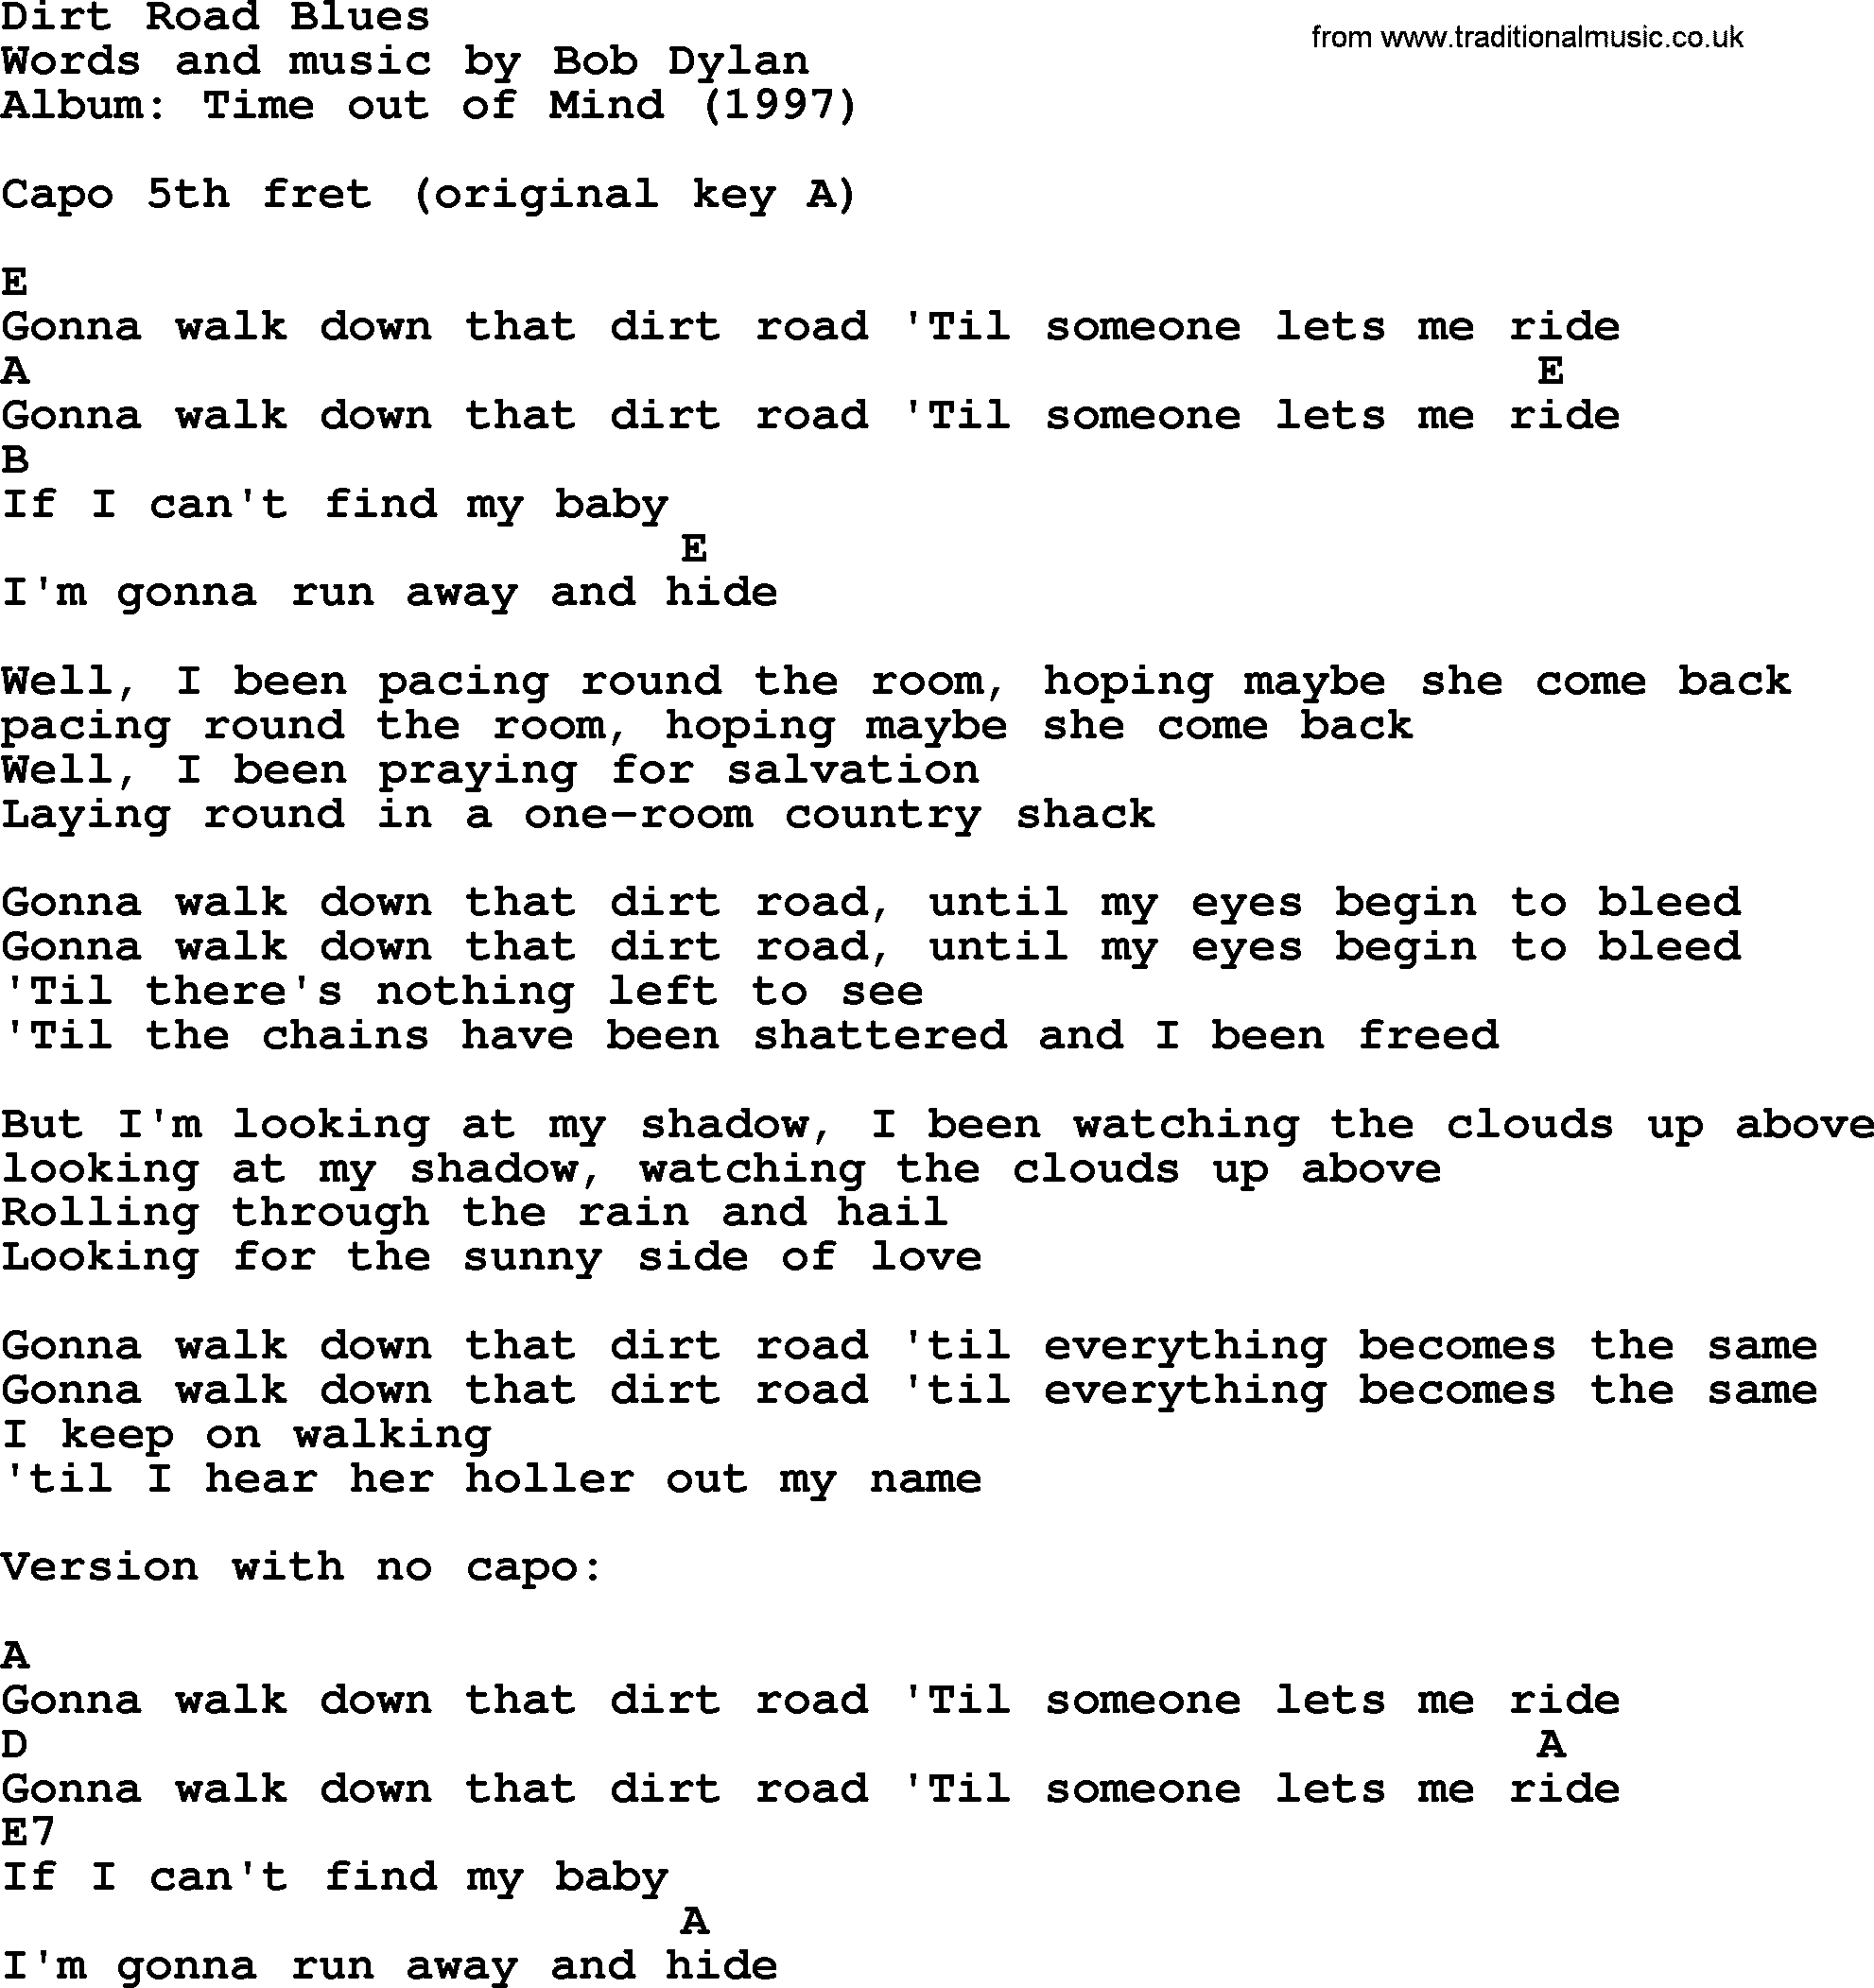 Bob Dylan song, lyrics with chords - Dirt Road Blues